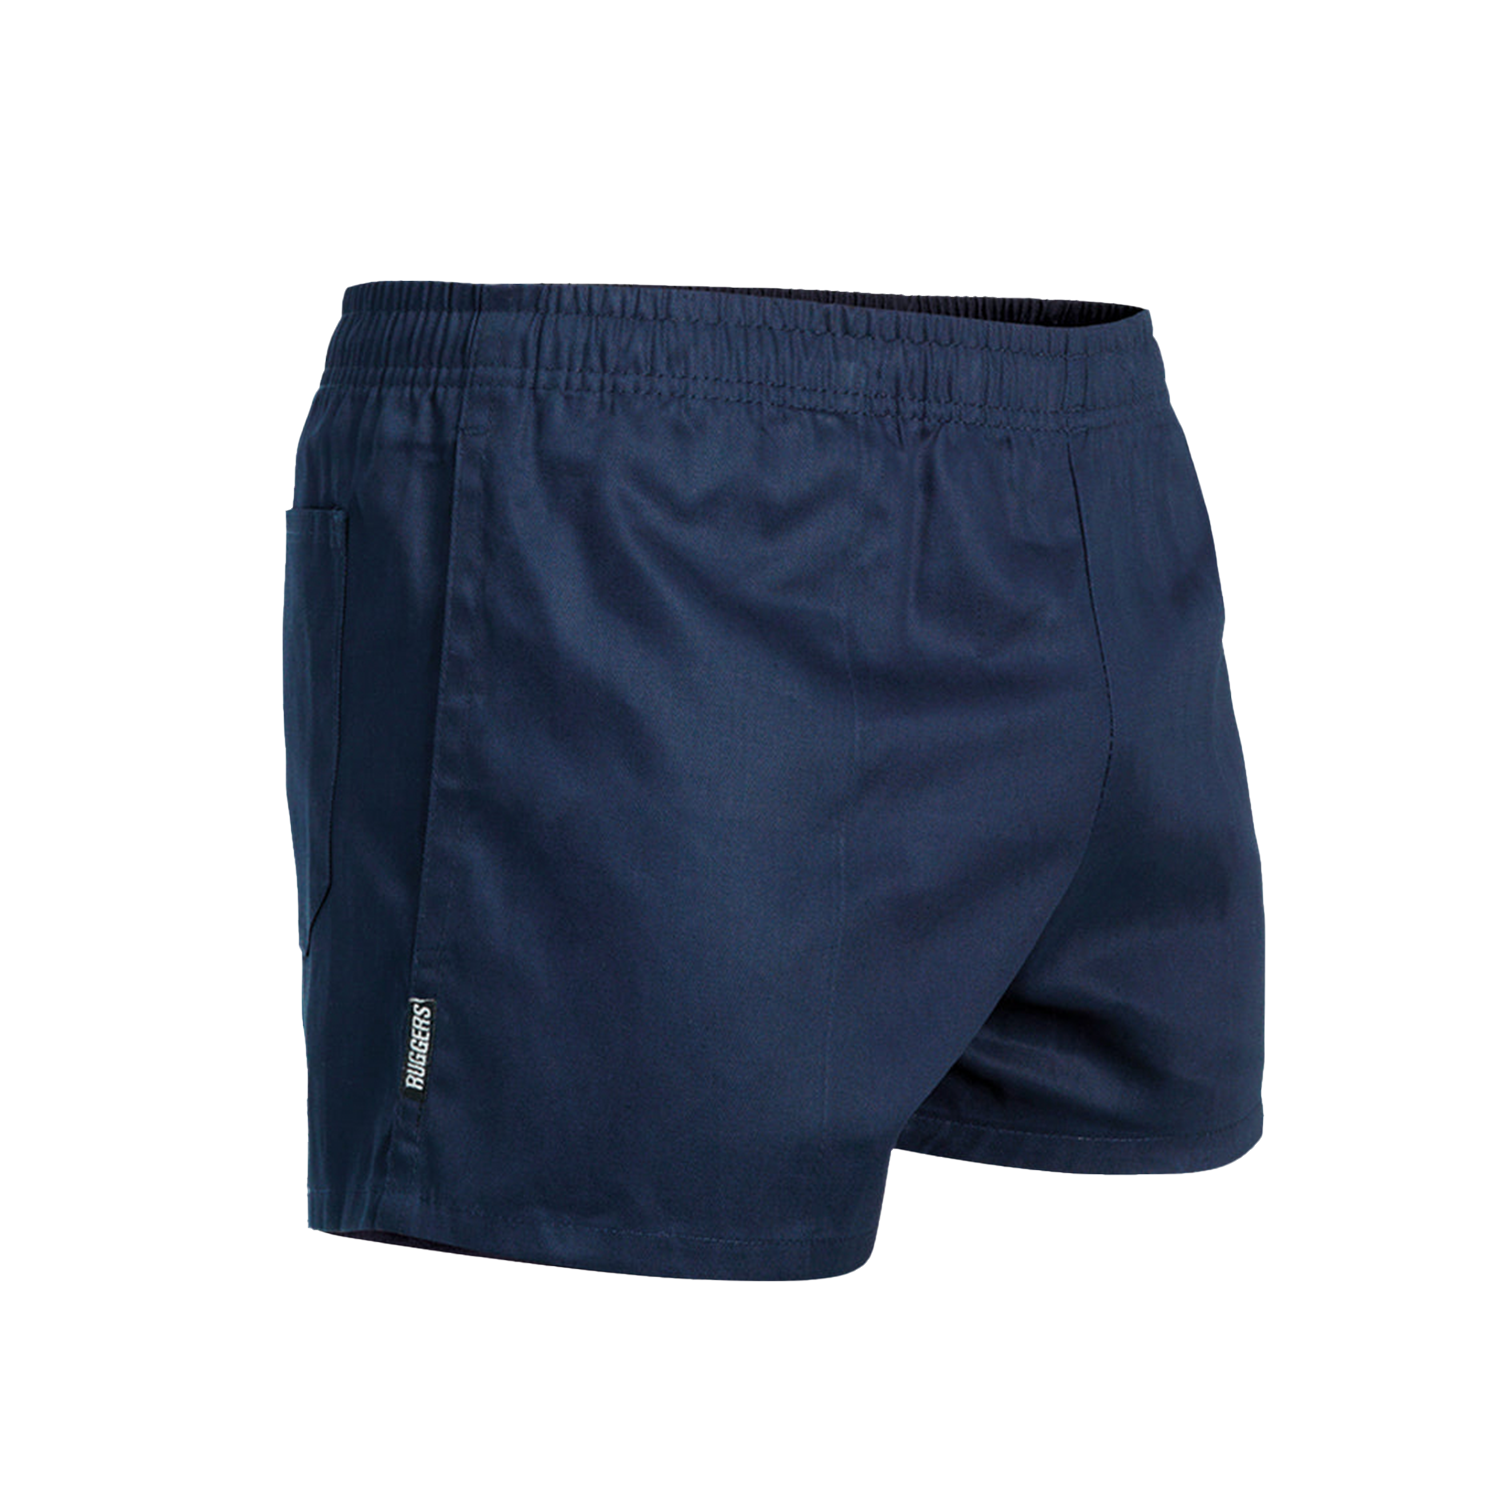 KingGee Men's Original Rugger Cotton Drill Shorts - Navy - Totally Workwear